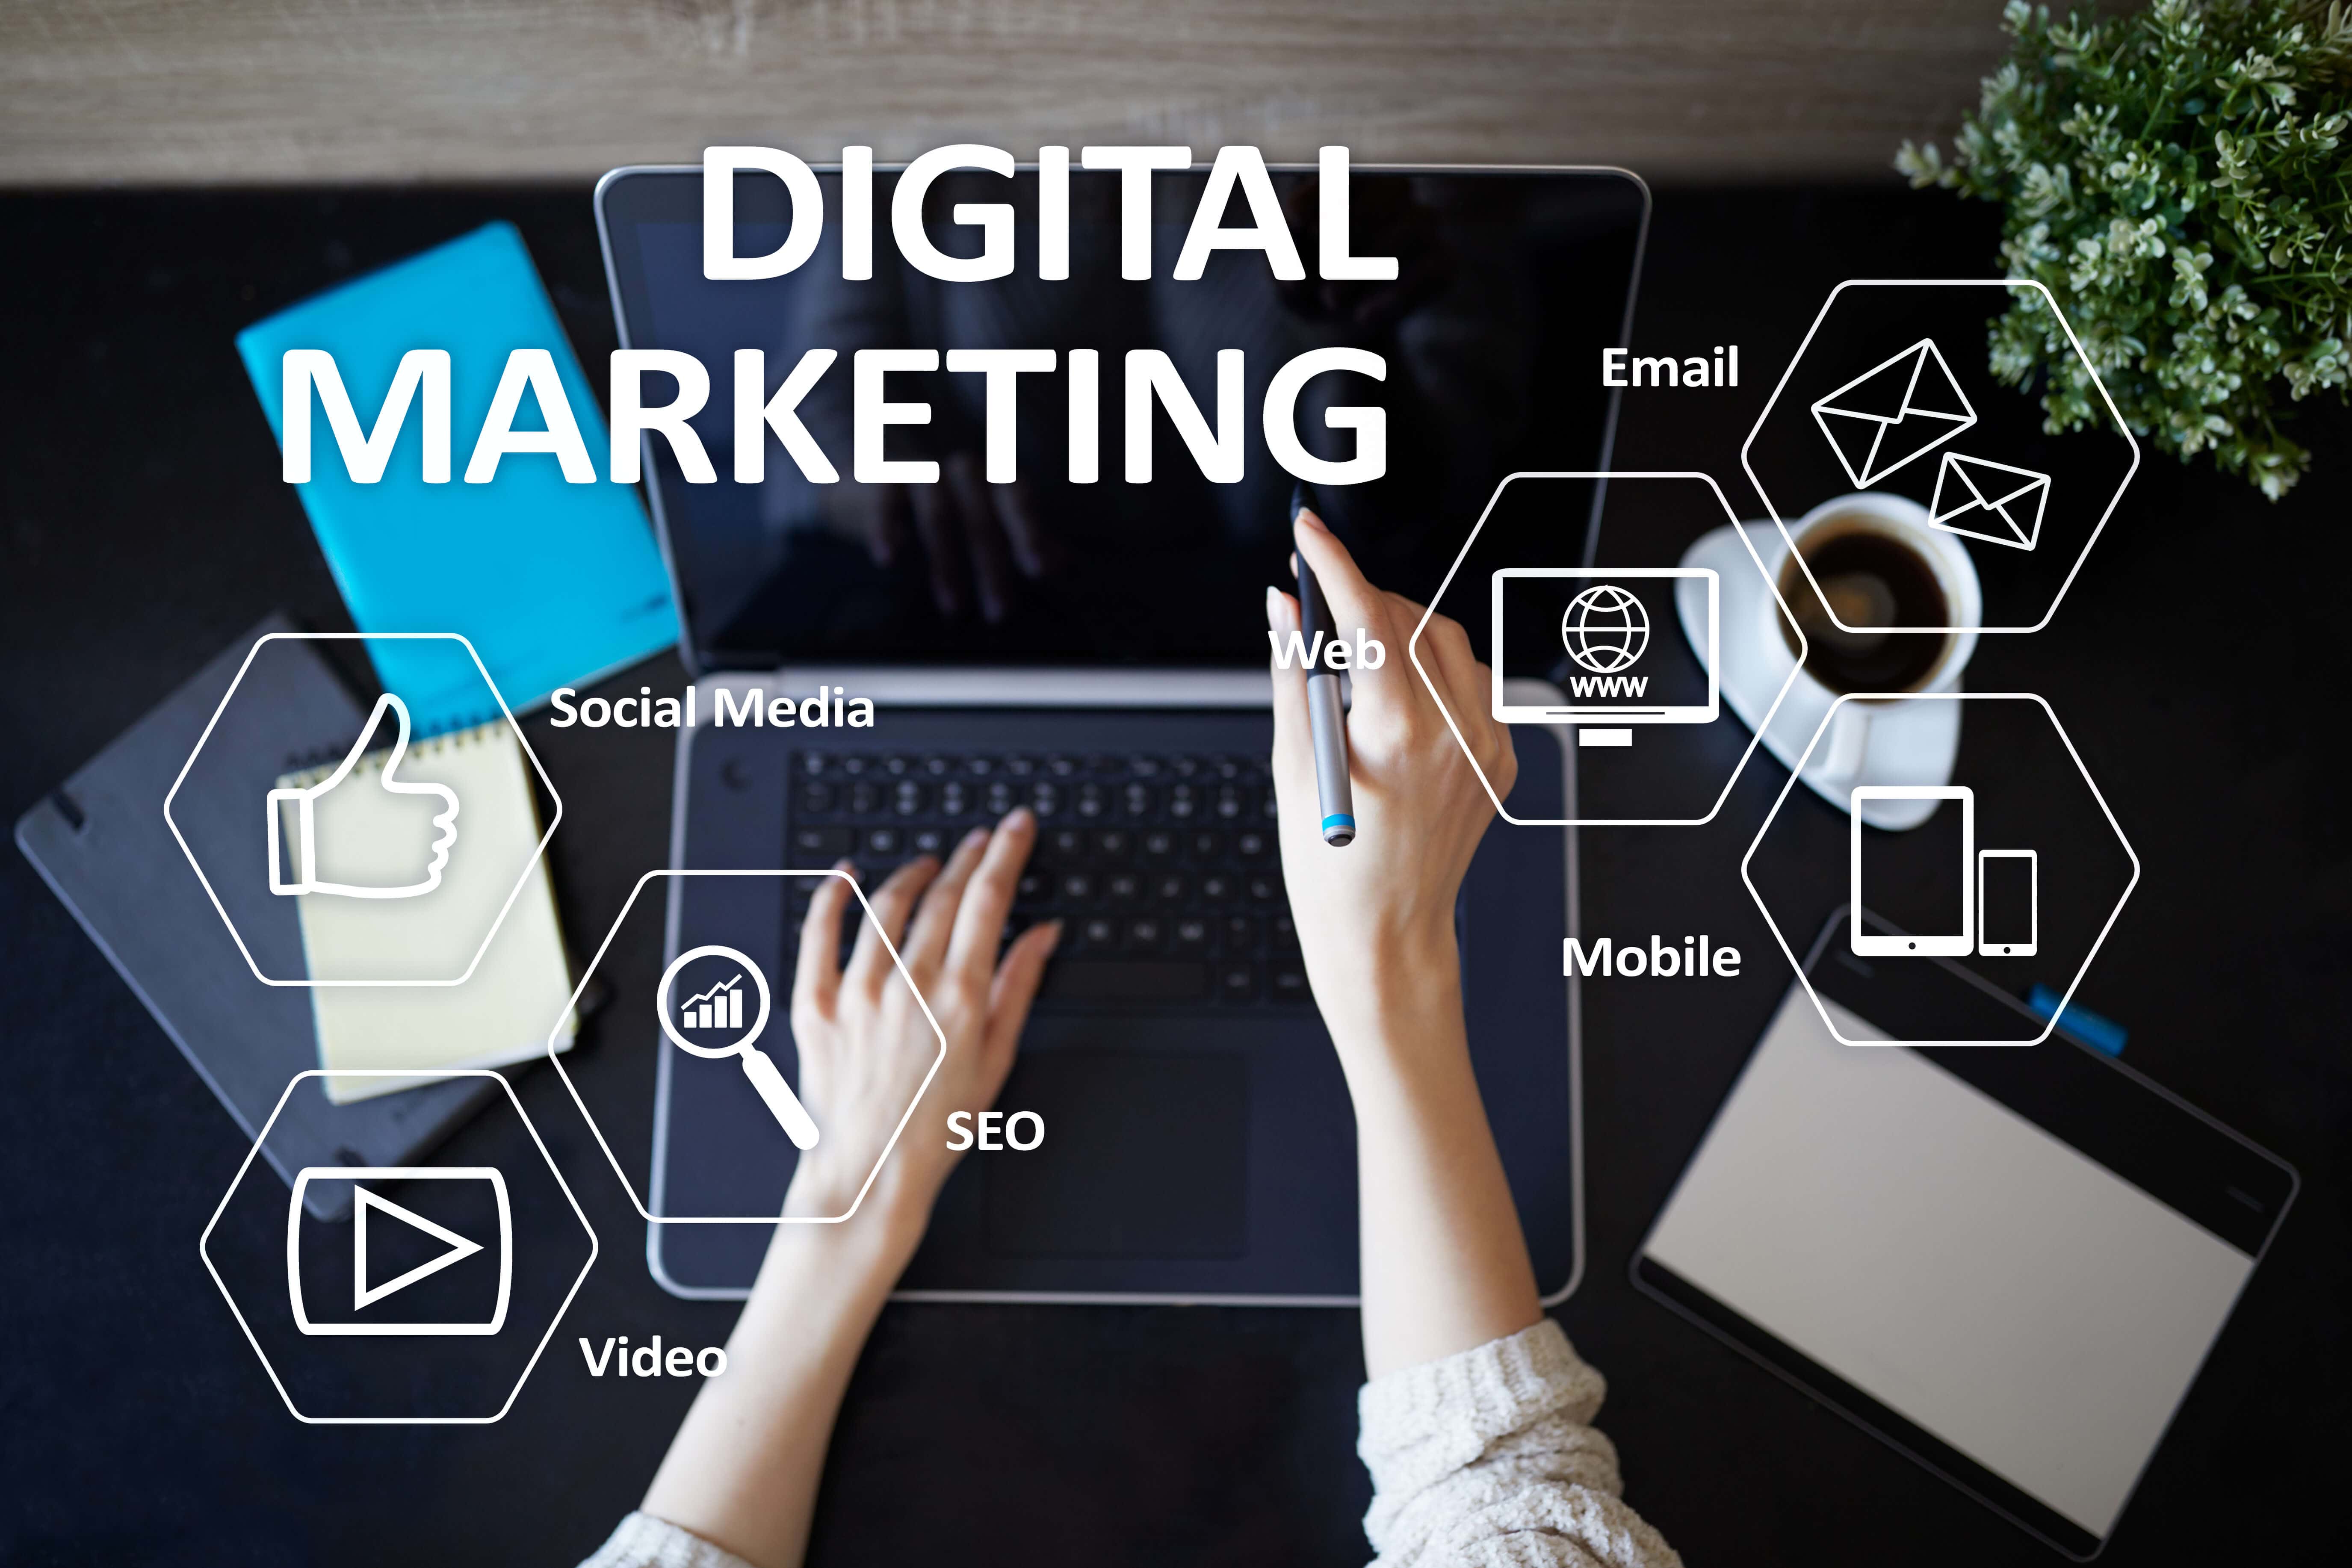 Digital Marketing Case Study, multi-channels marketing plan